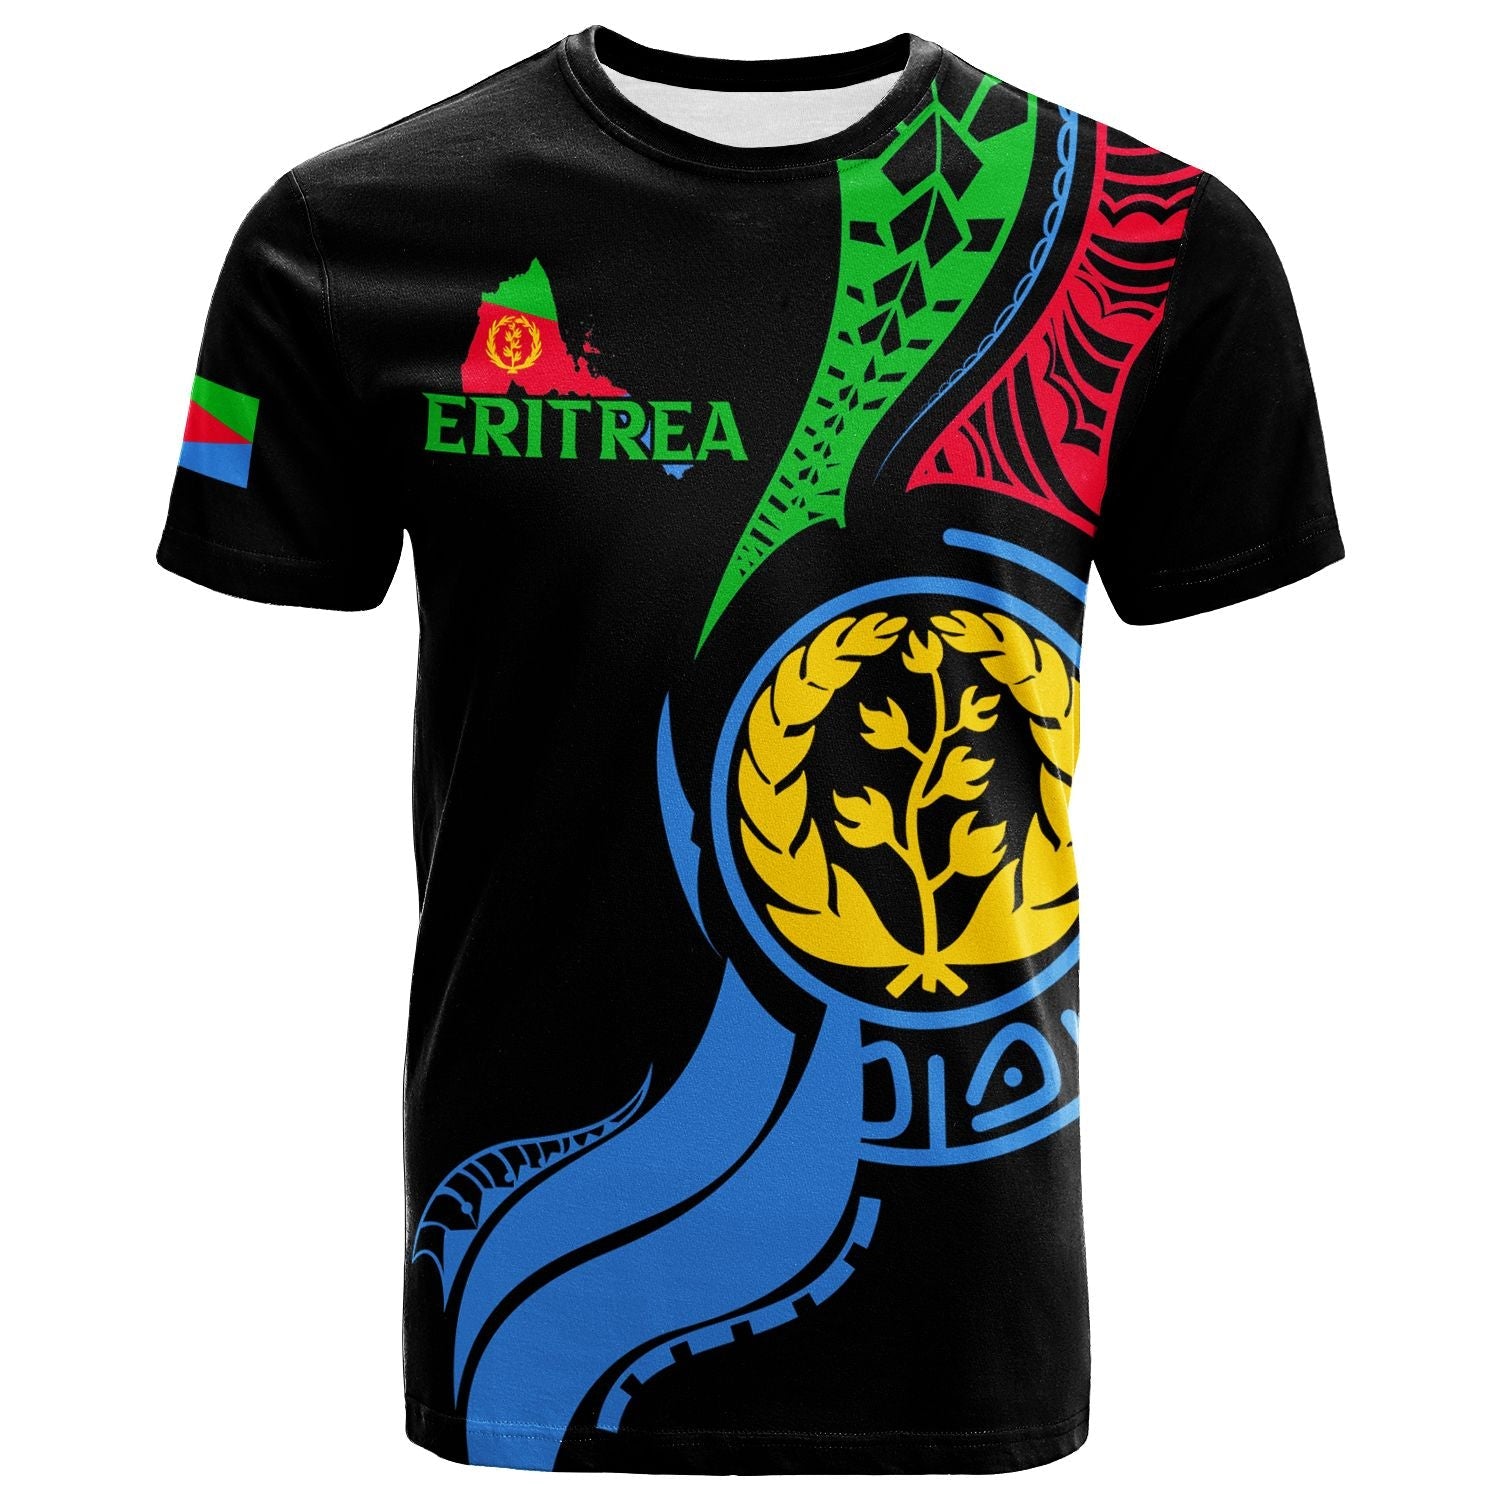 eritrea-t-shirt-flag-map